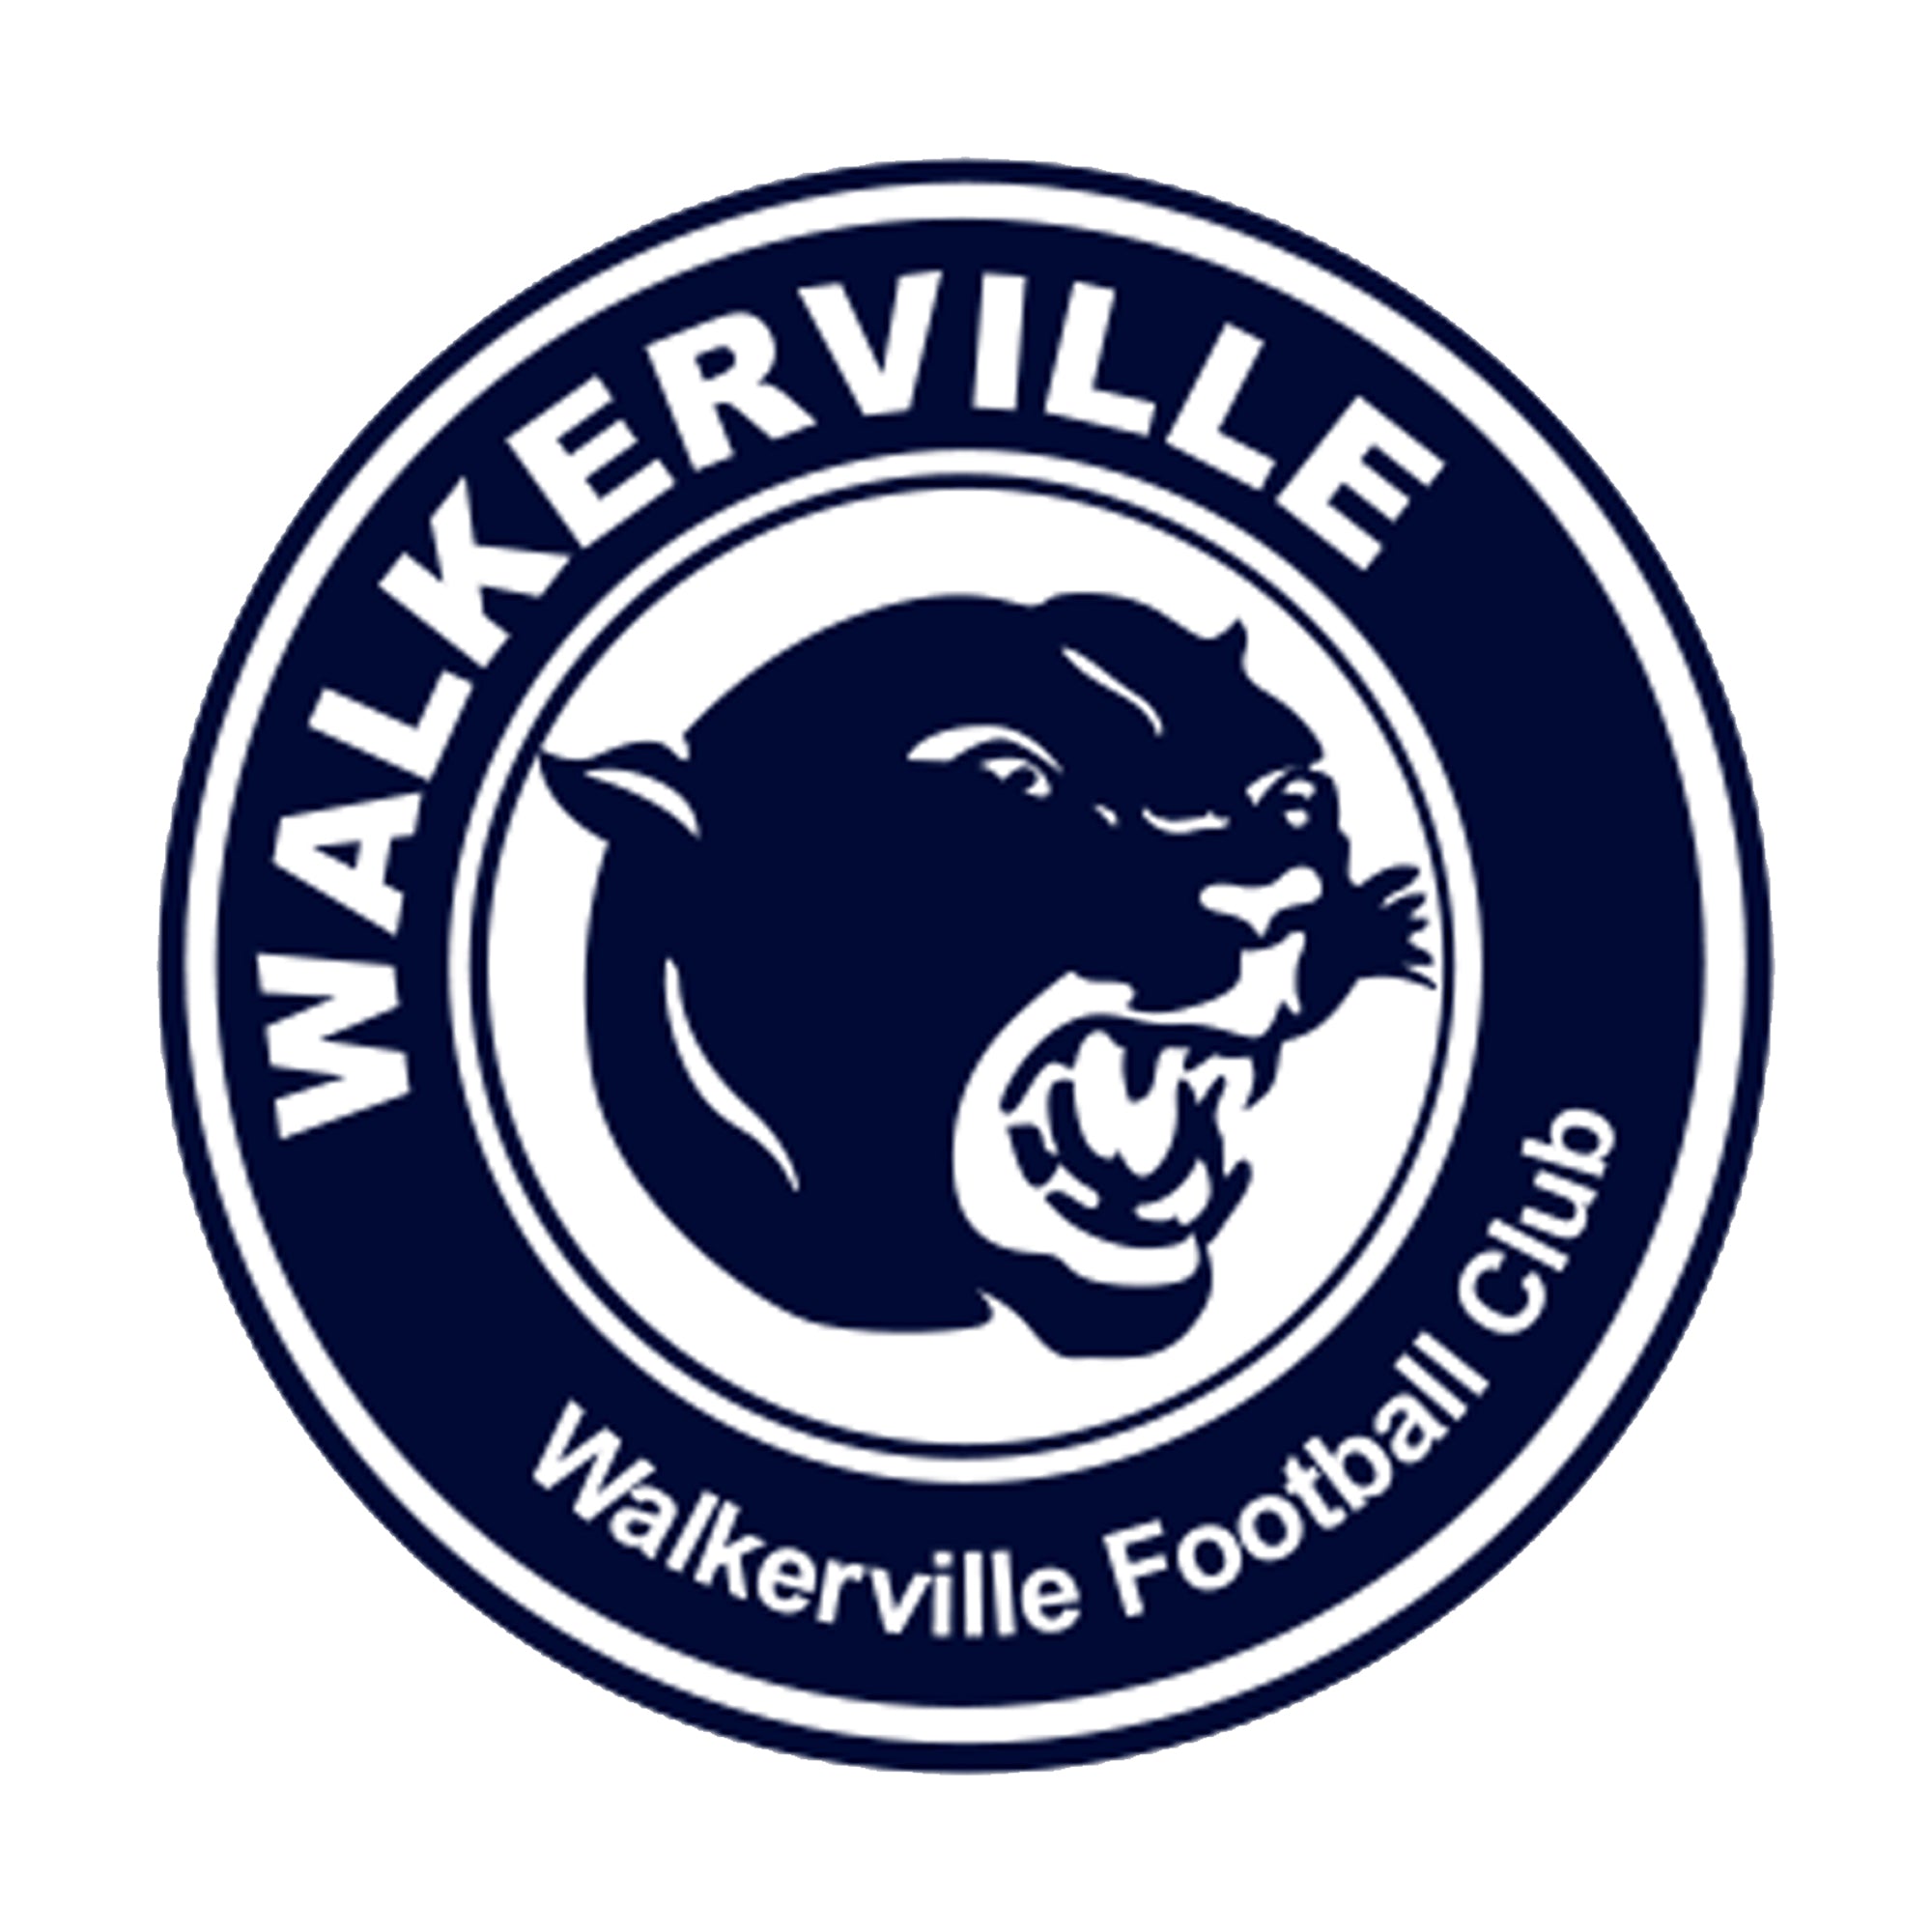 Walkerville Senior Football Club